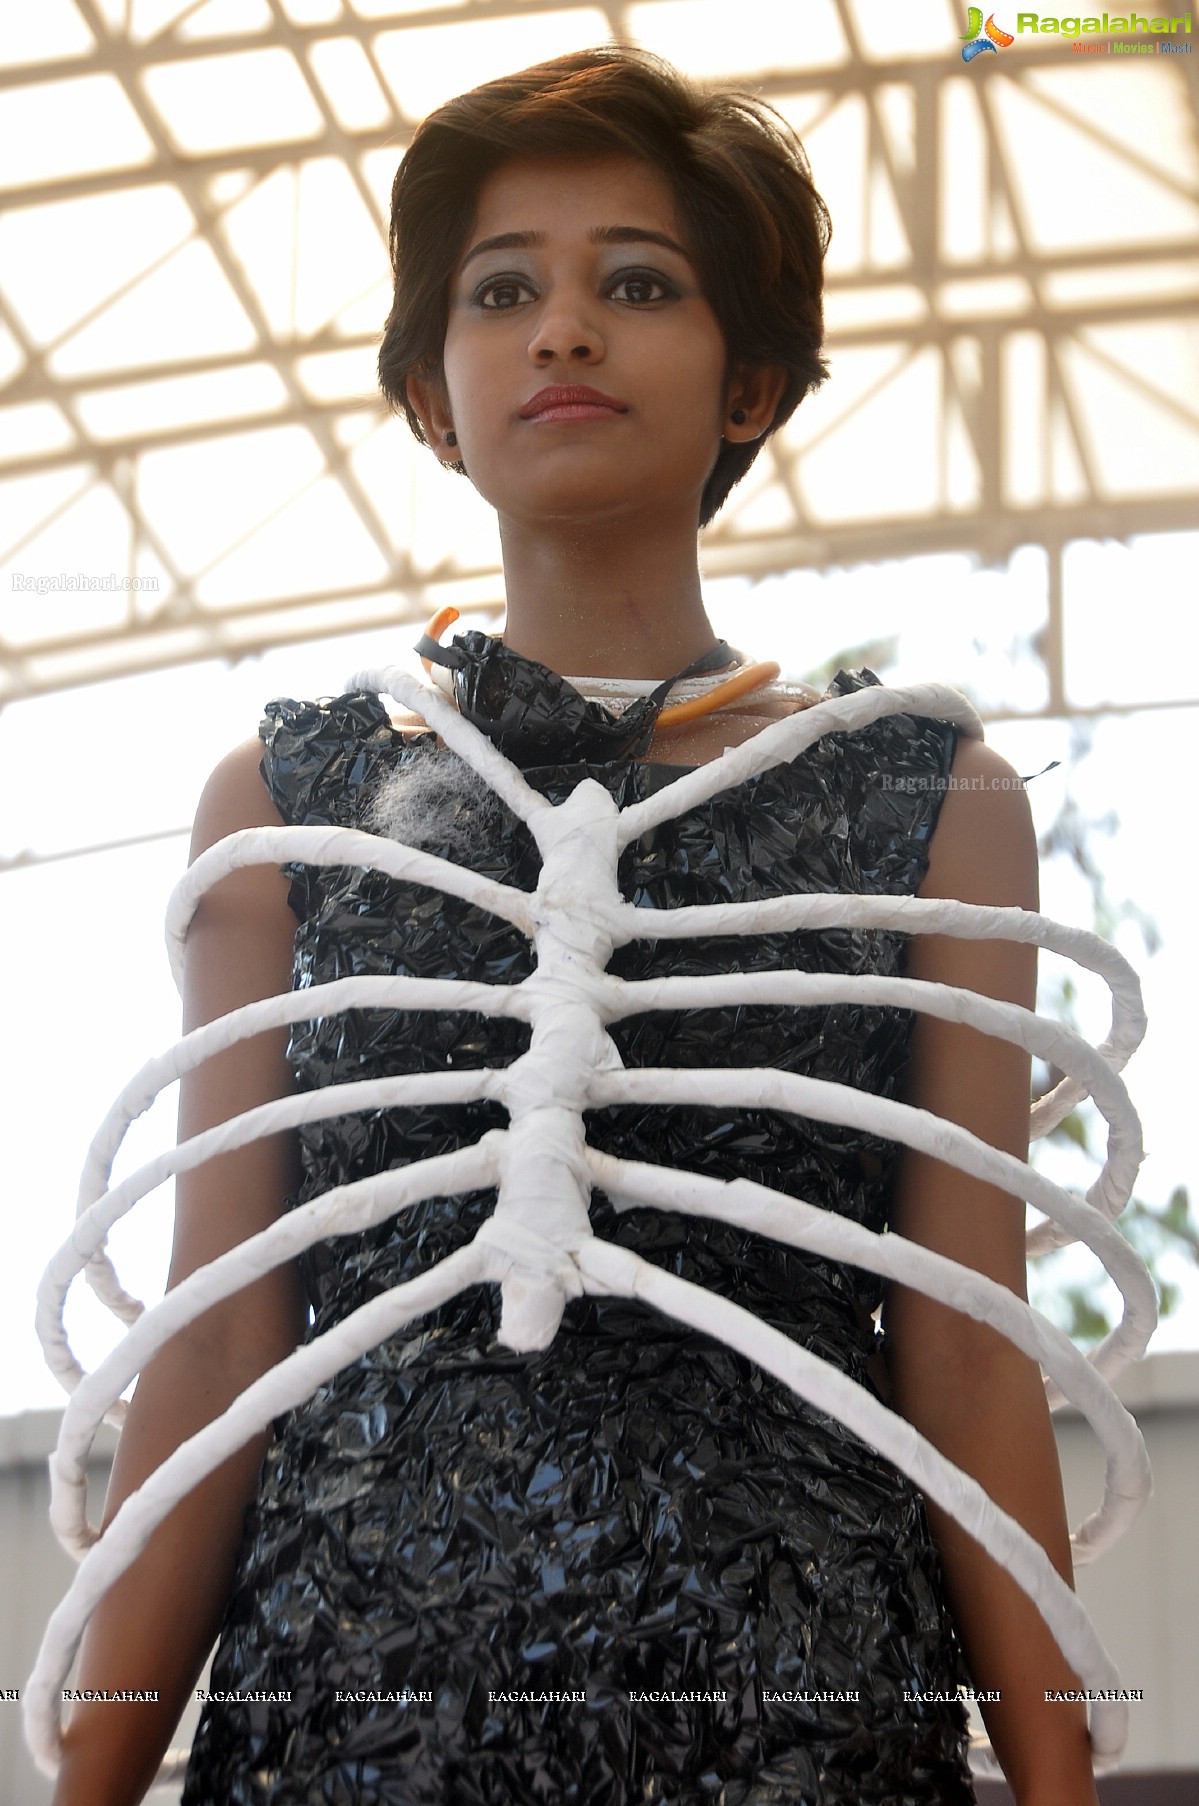 Apollo Cancer Hospitals Fashion Show on Cancer Prevention